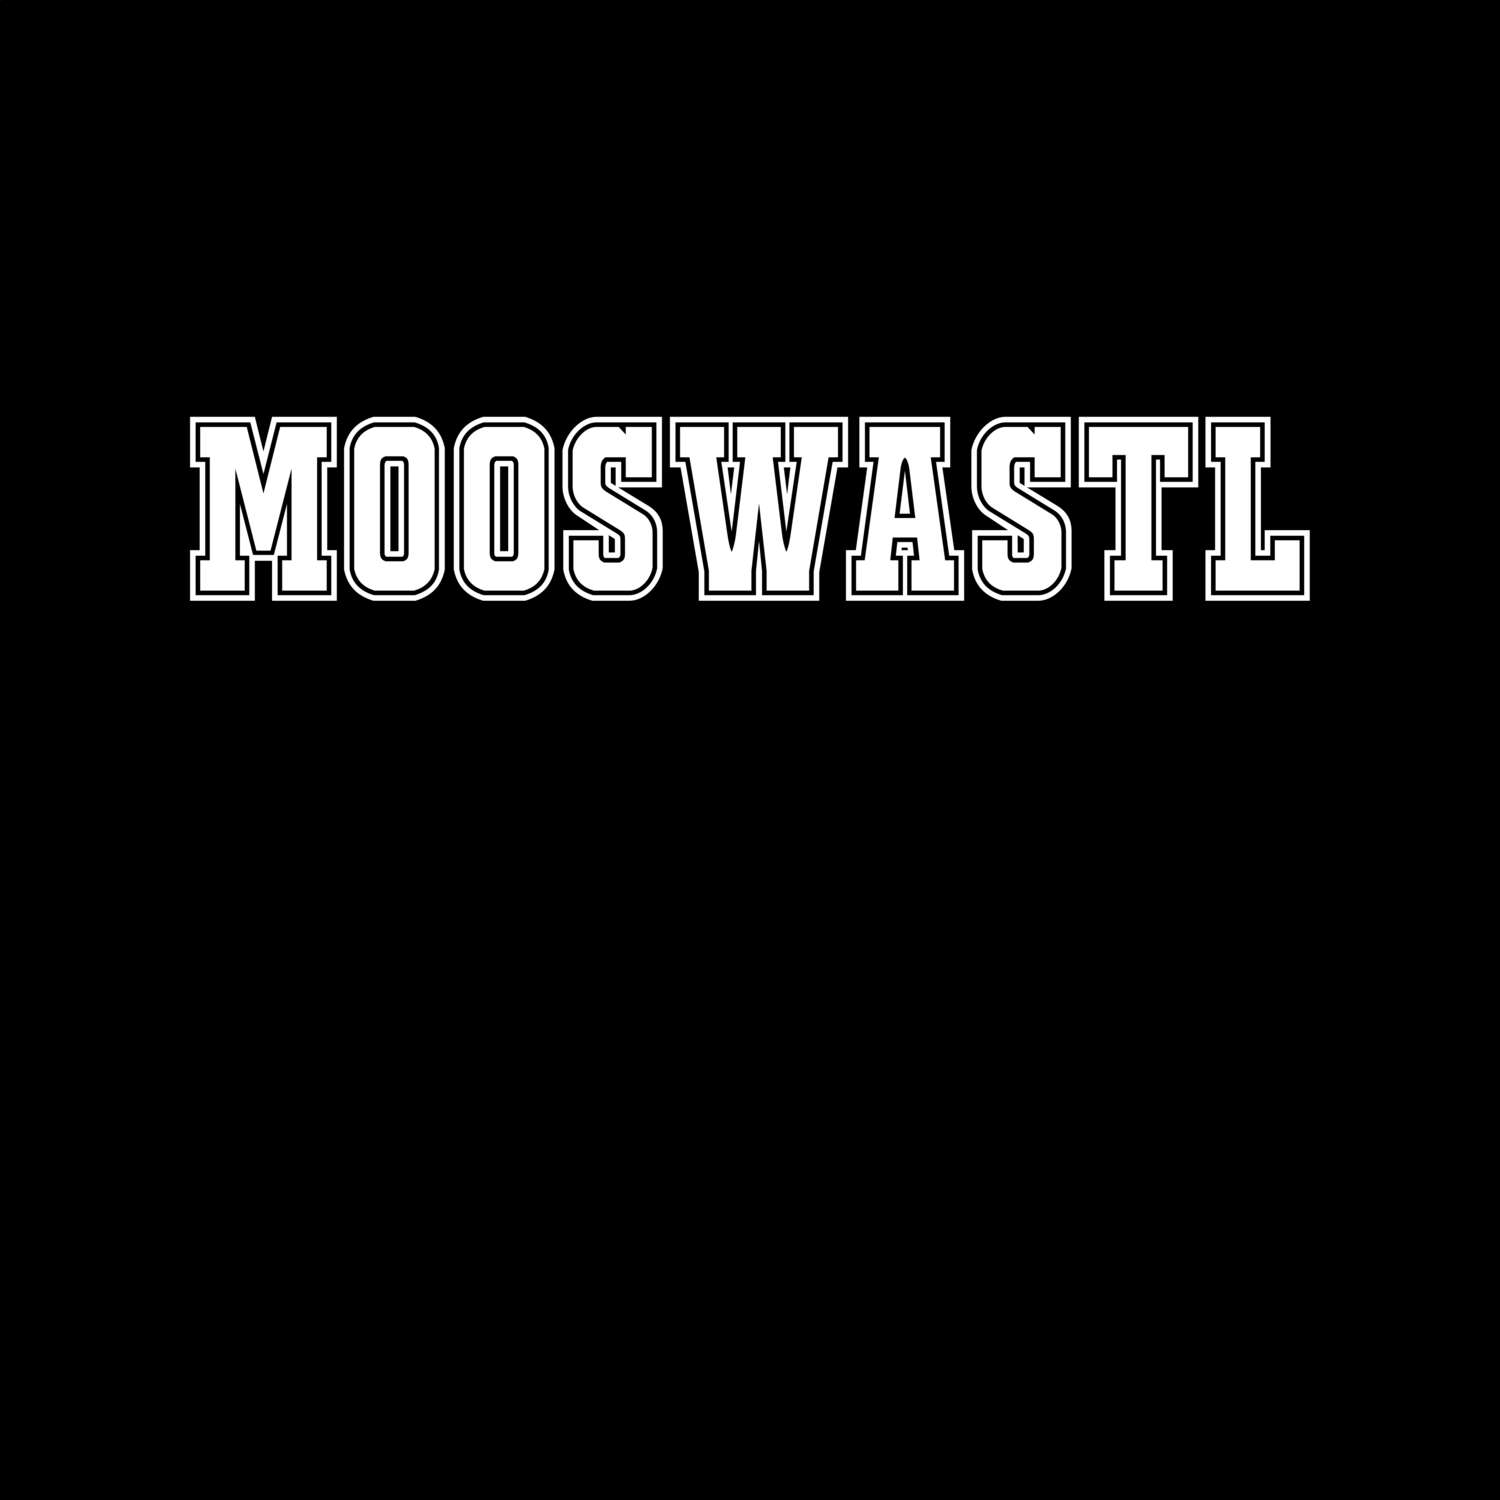 Mooswastl T-Shirt »Classic«